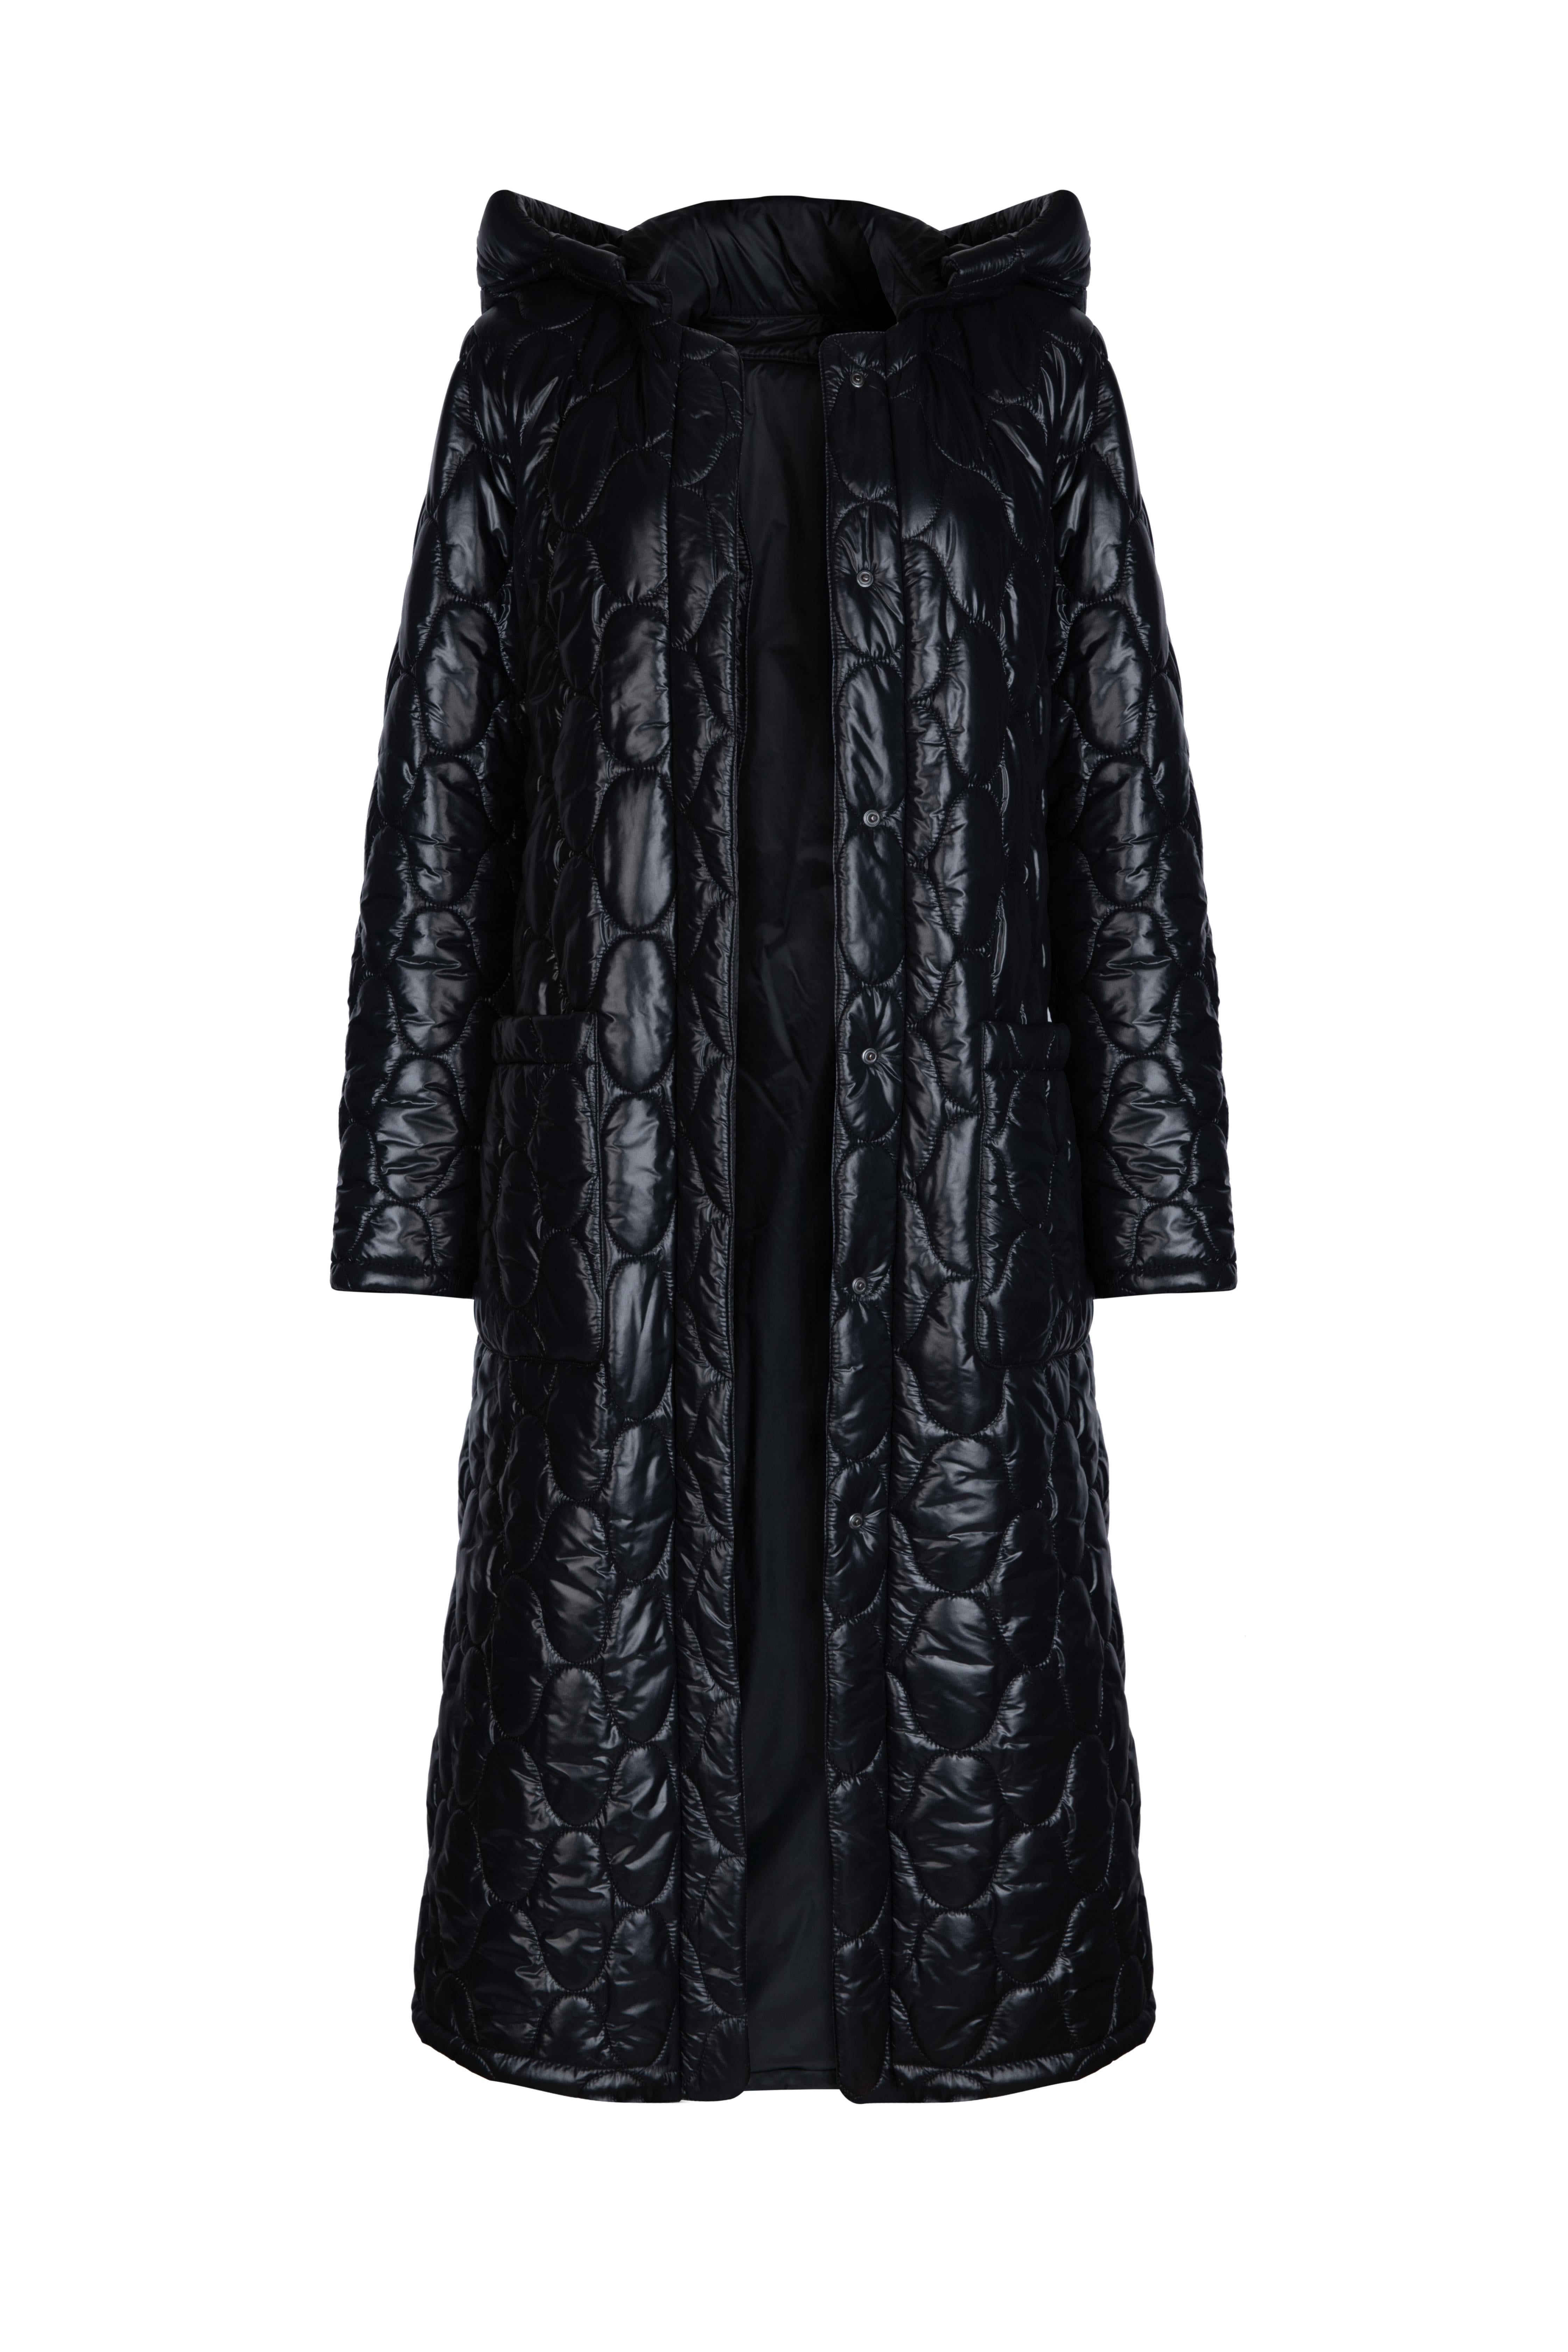 Verheyen London Aurora Quilted Coat with detachable hood - Size uk 14 For Sale 3